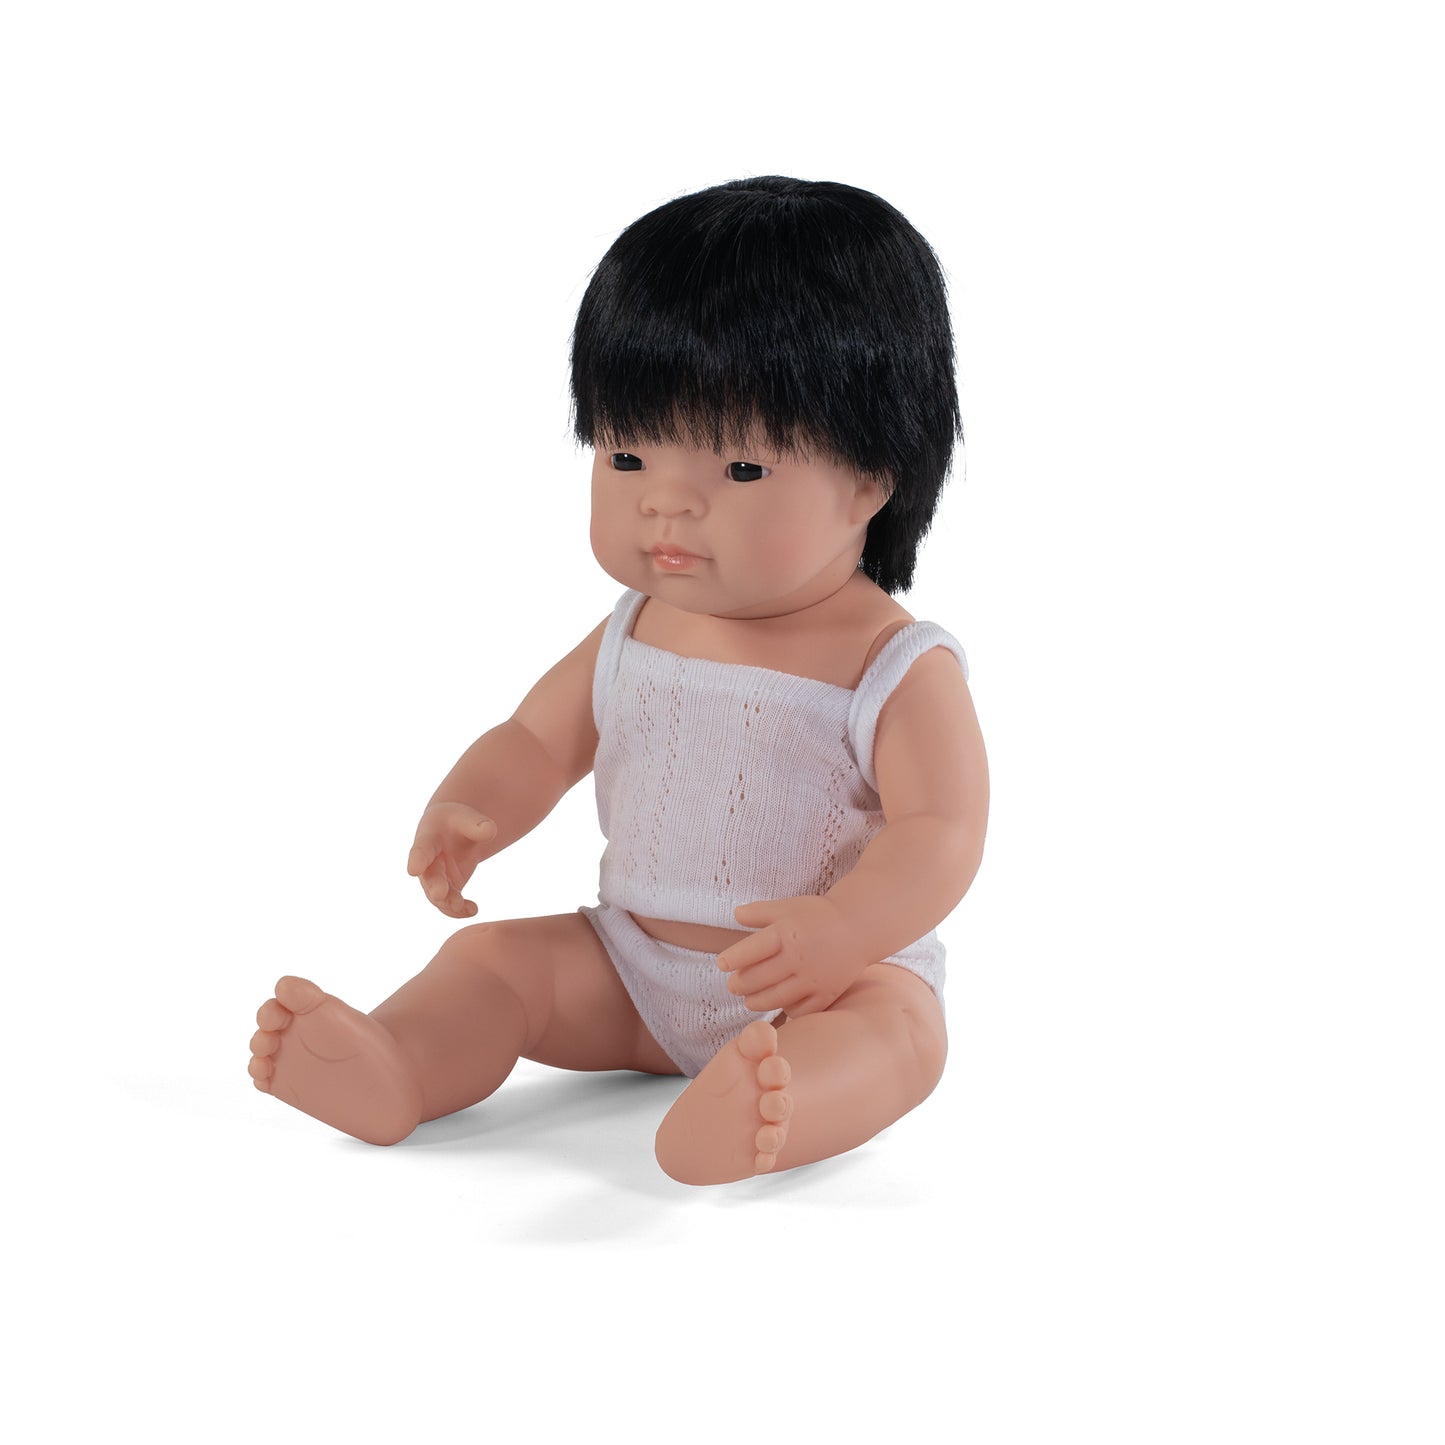 Miniland Dolls - Anatomically Correct 38cm Baby Doll